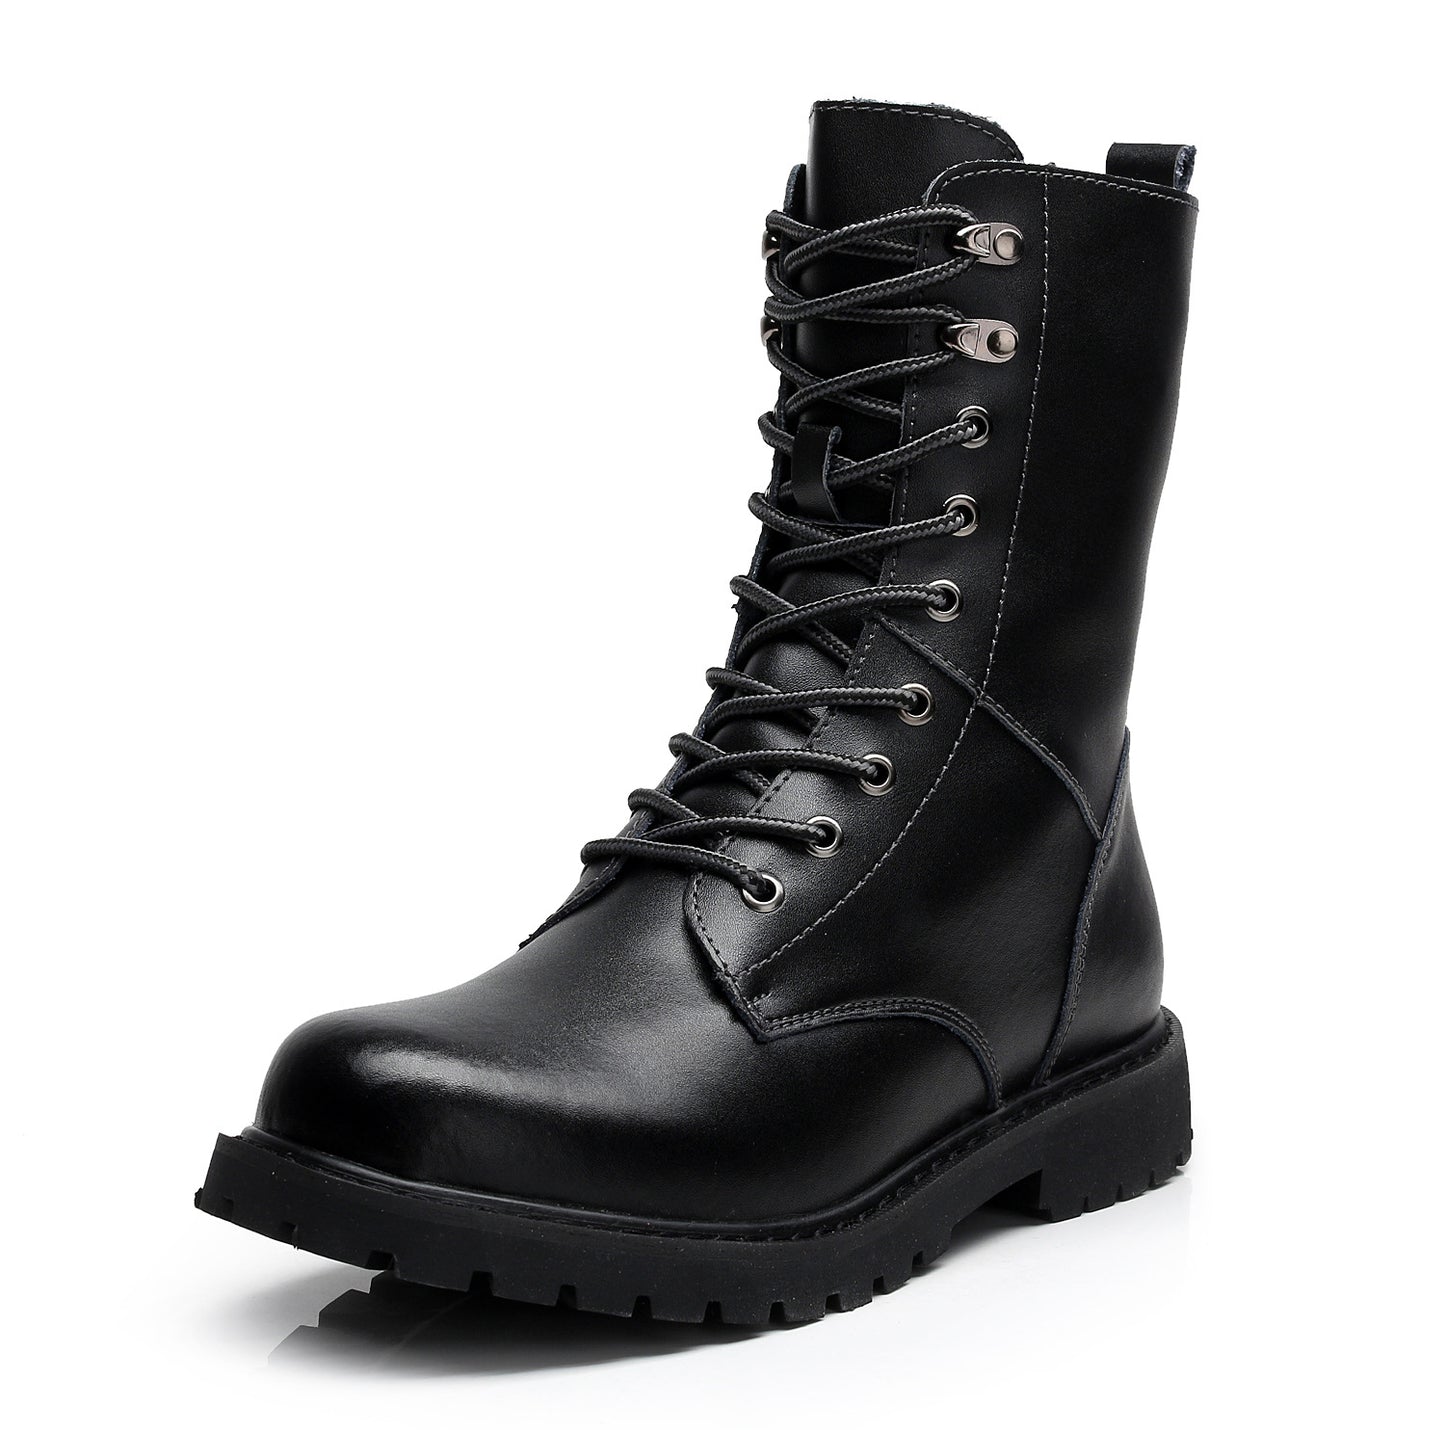 Winter high top men's shoes leather military boots men's plus fleece high top Martin boots - Carvan Mart Ltd